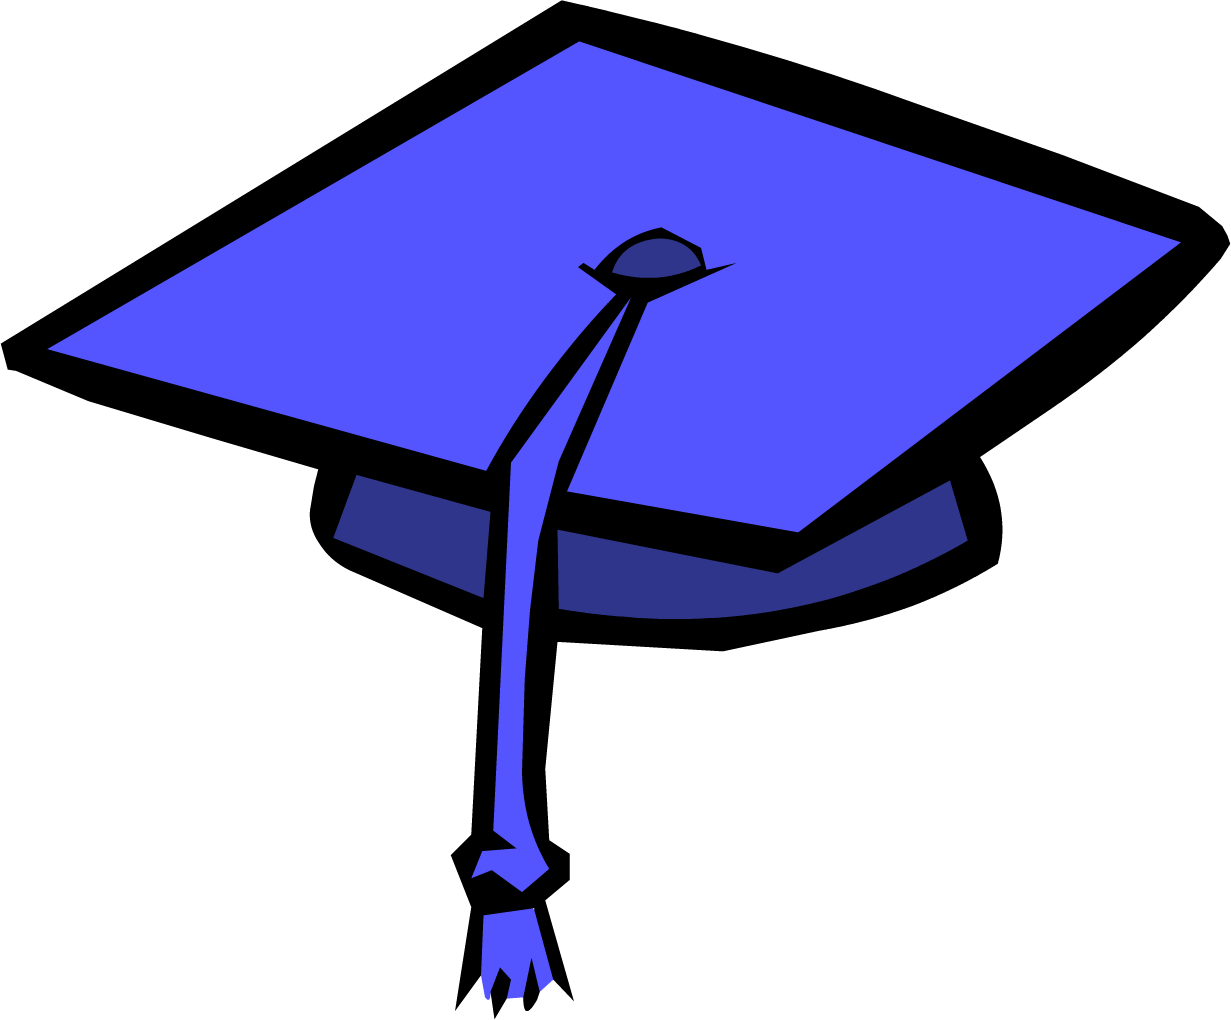 Free Graduation Hat Png, Download Free Graduation Hat Png png images